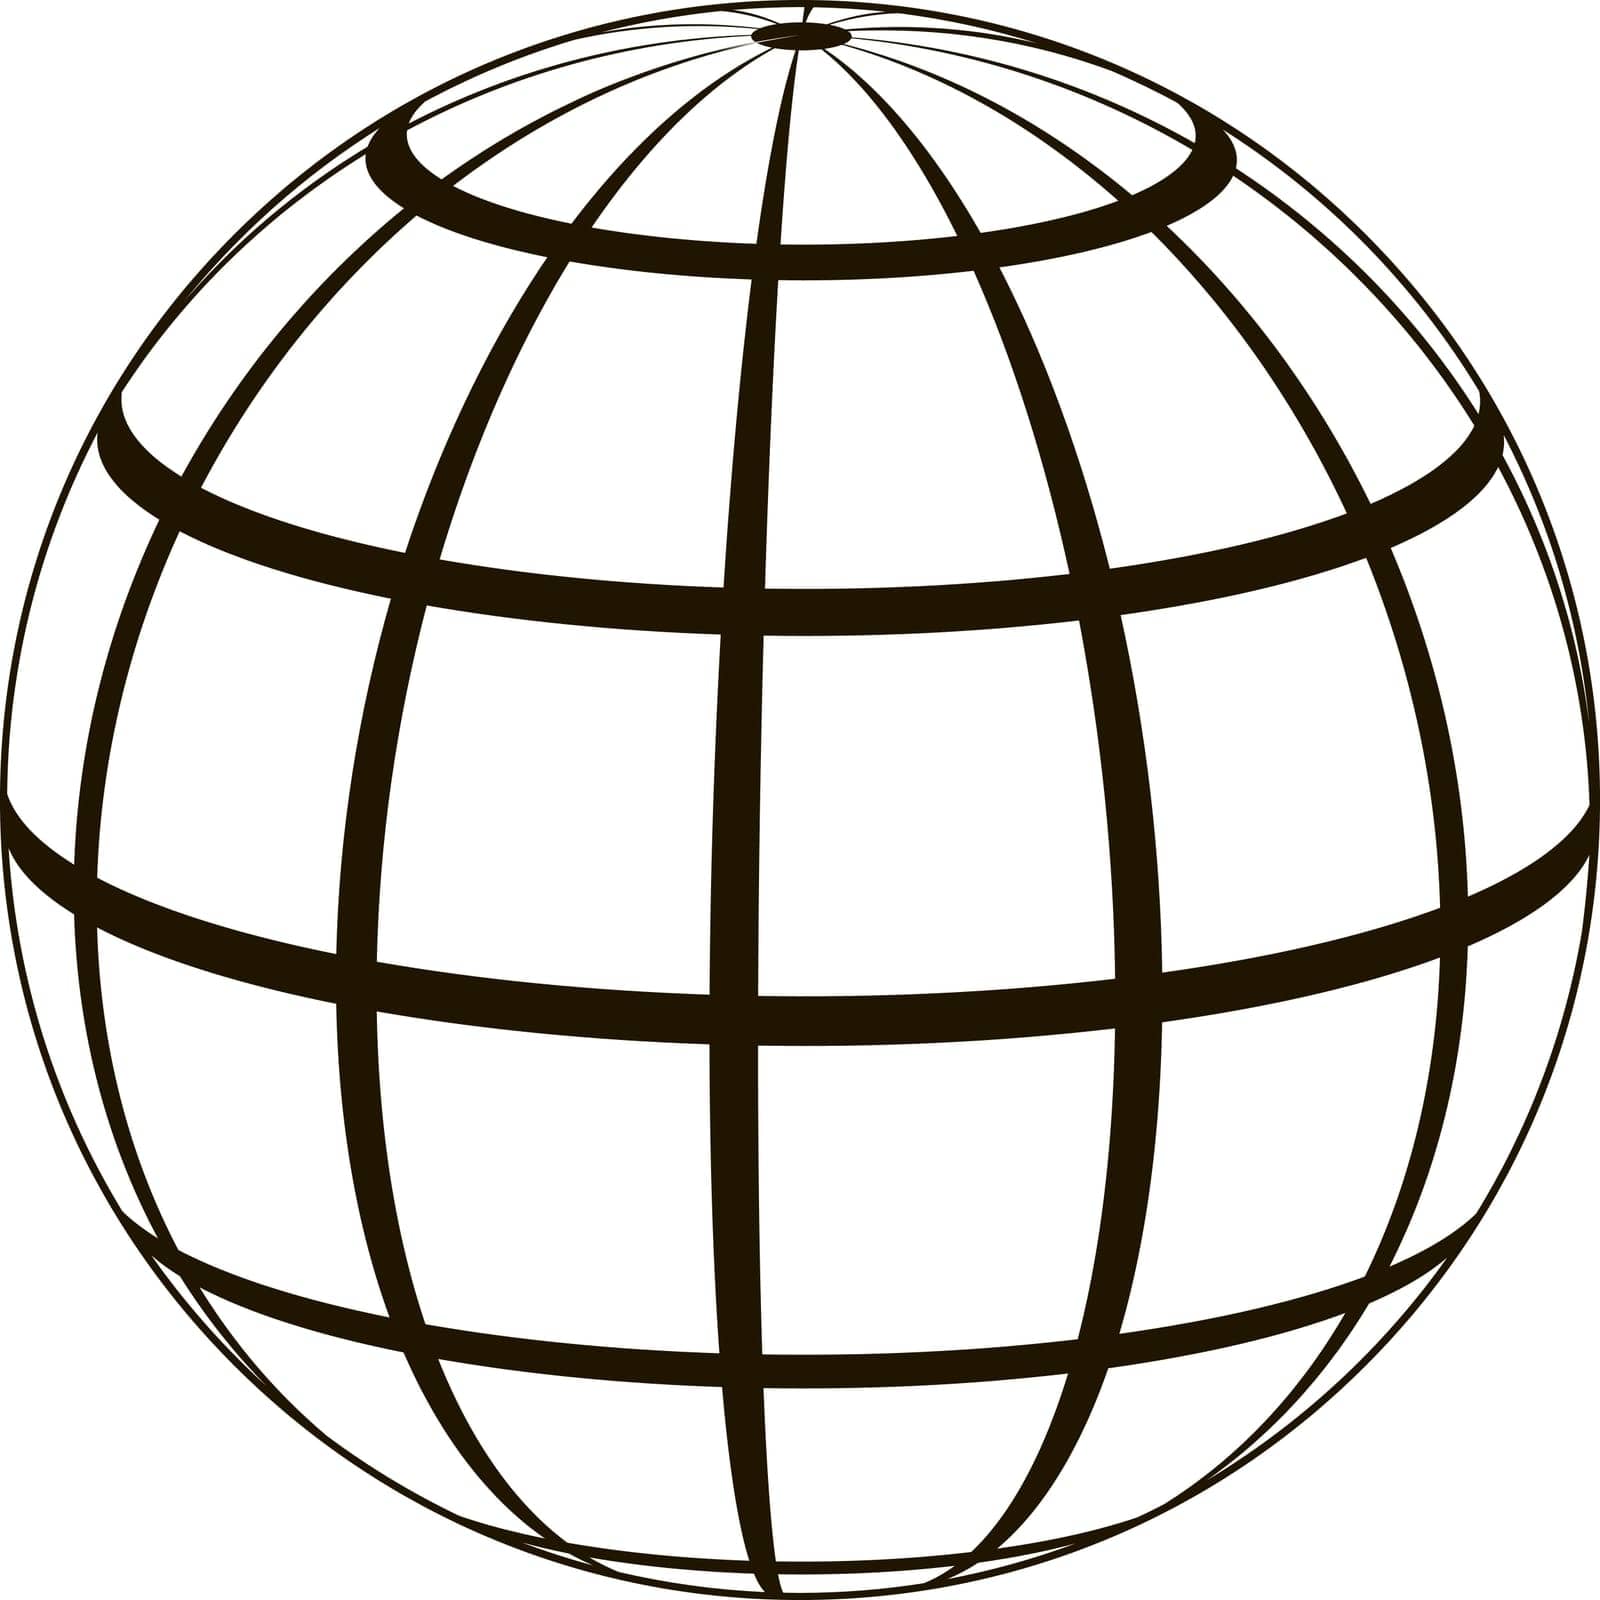 Graticule globe Meridian parallel field lines  surface template graticule